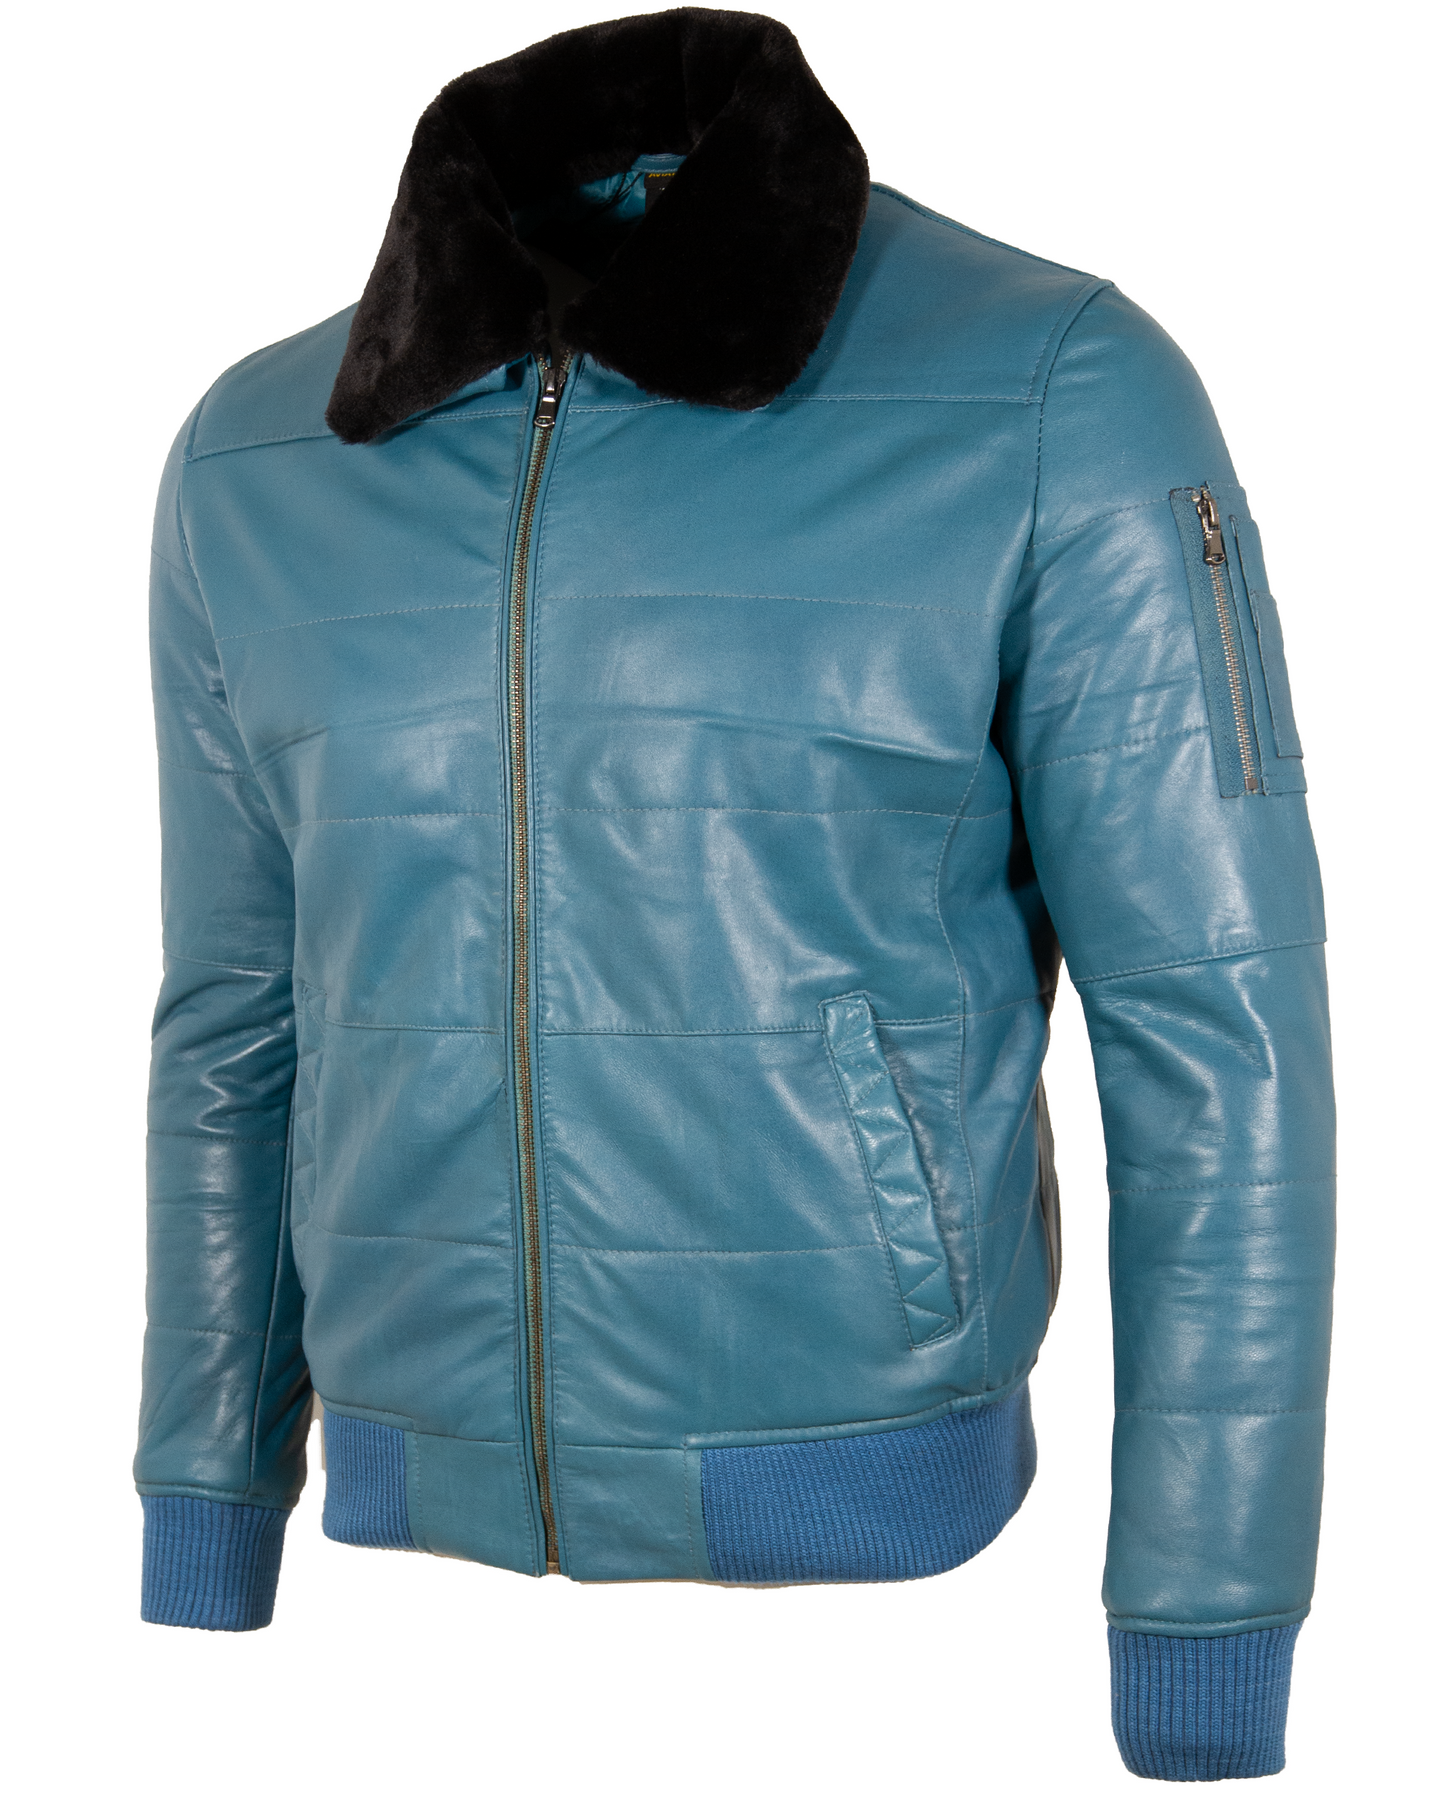 Aviatrix Men's Real Leather Pilot Aviator Fashion Jacket (ZADV) - Denim Blue